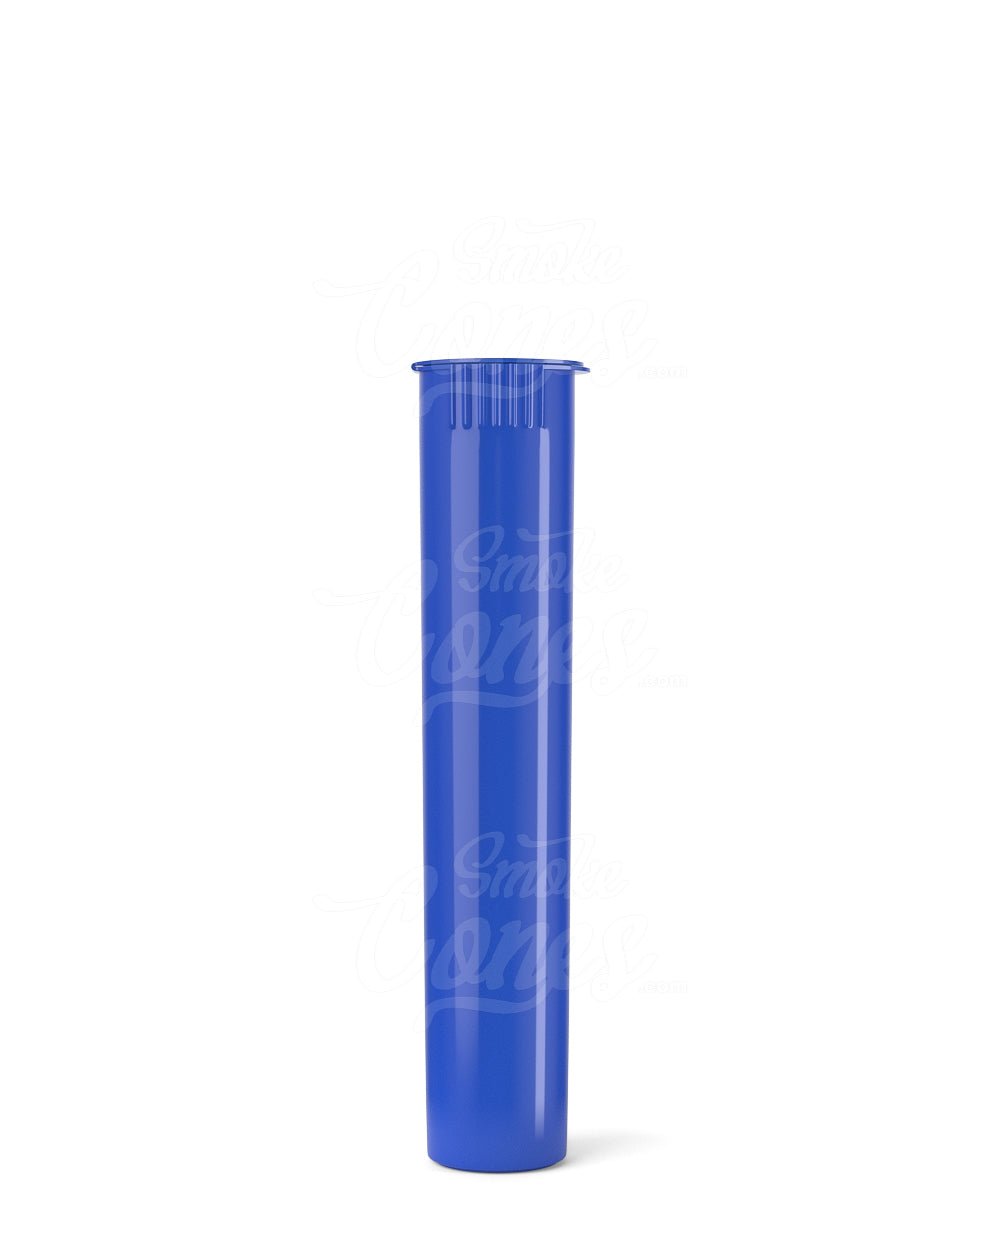 95mm Child Resistant Pop Top Opaque Blue Plastic Pre-Roll Tubes 1000/Box - 2